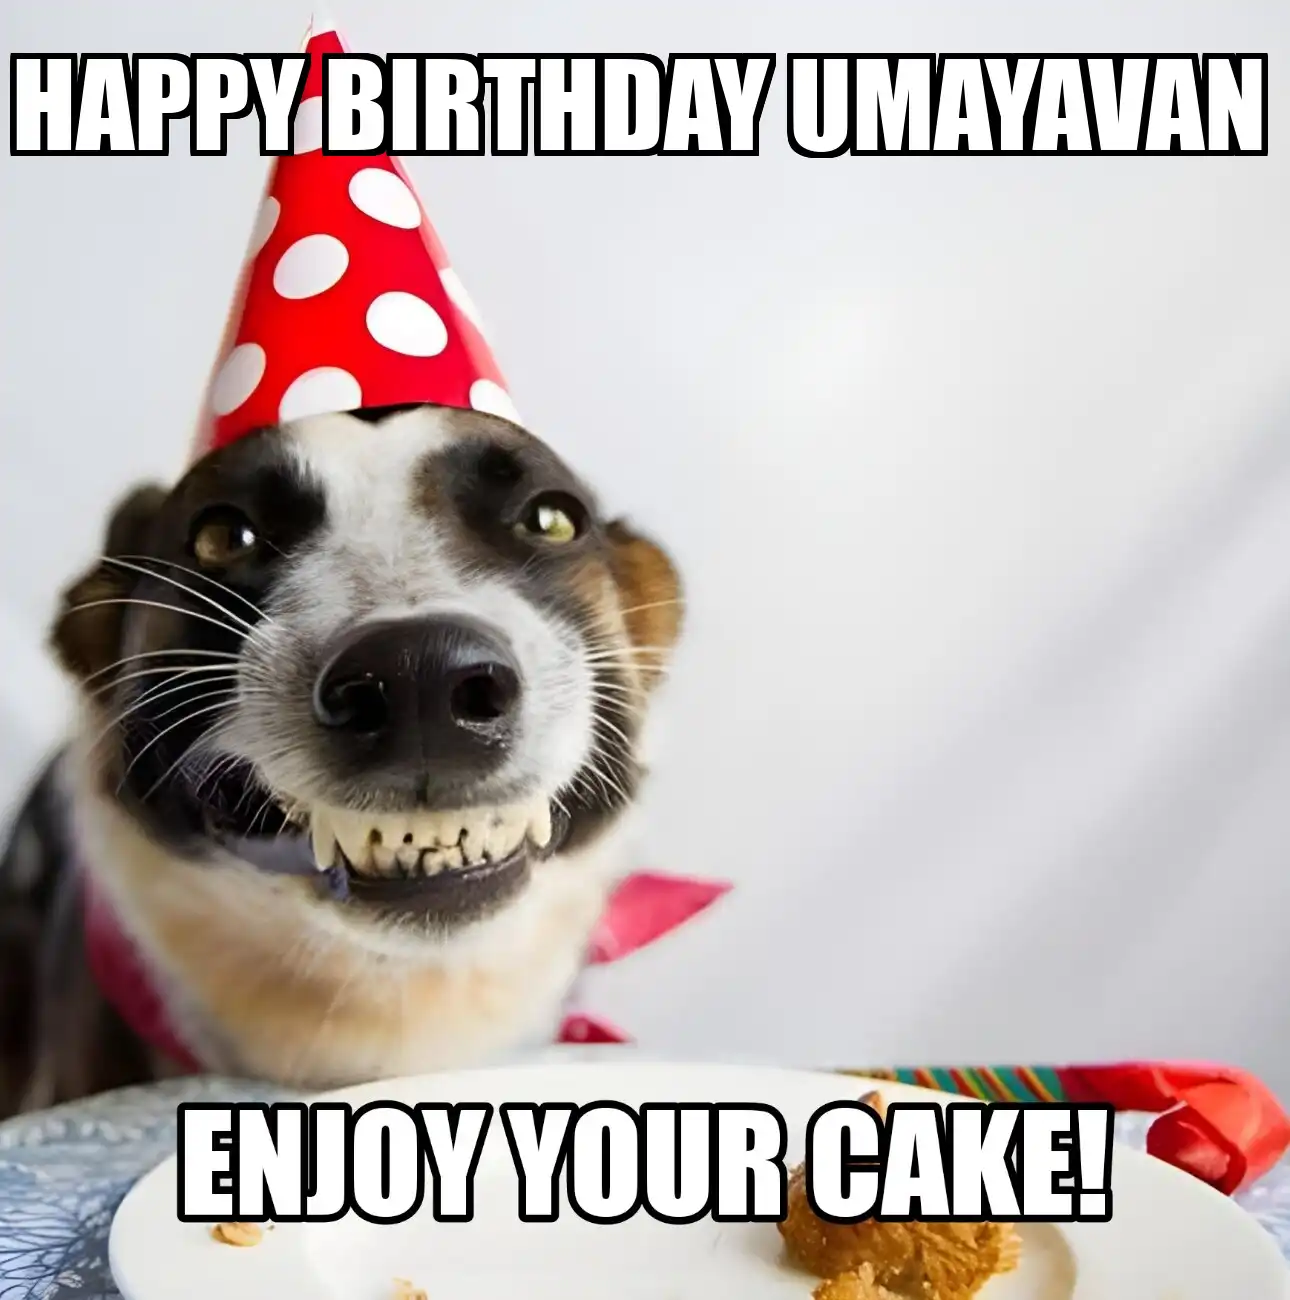 Happy Birthday Umayavan Enjoy Your Cake Dog Meme